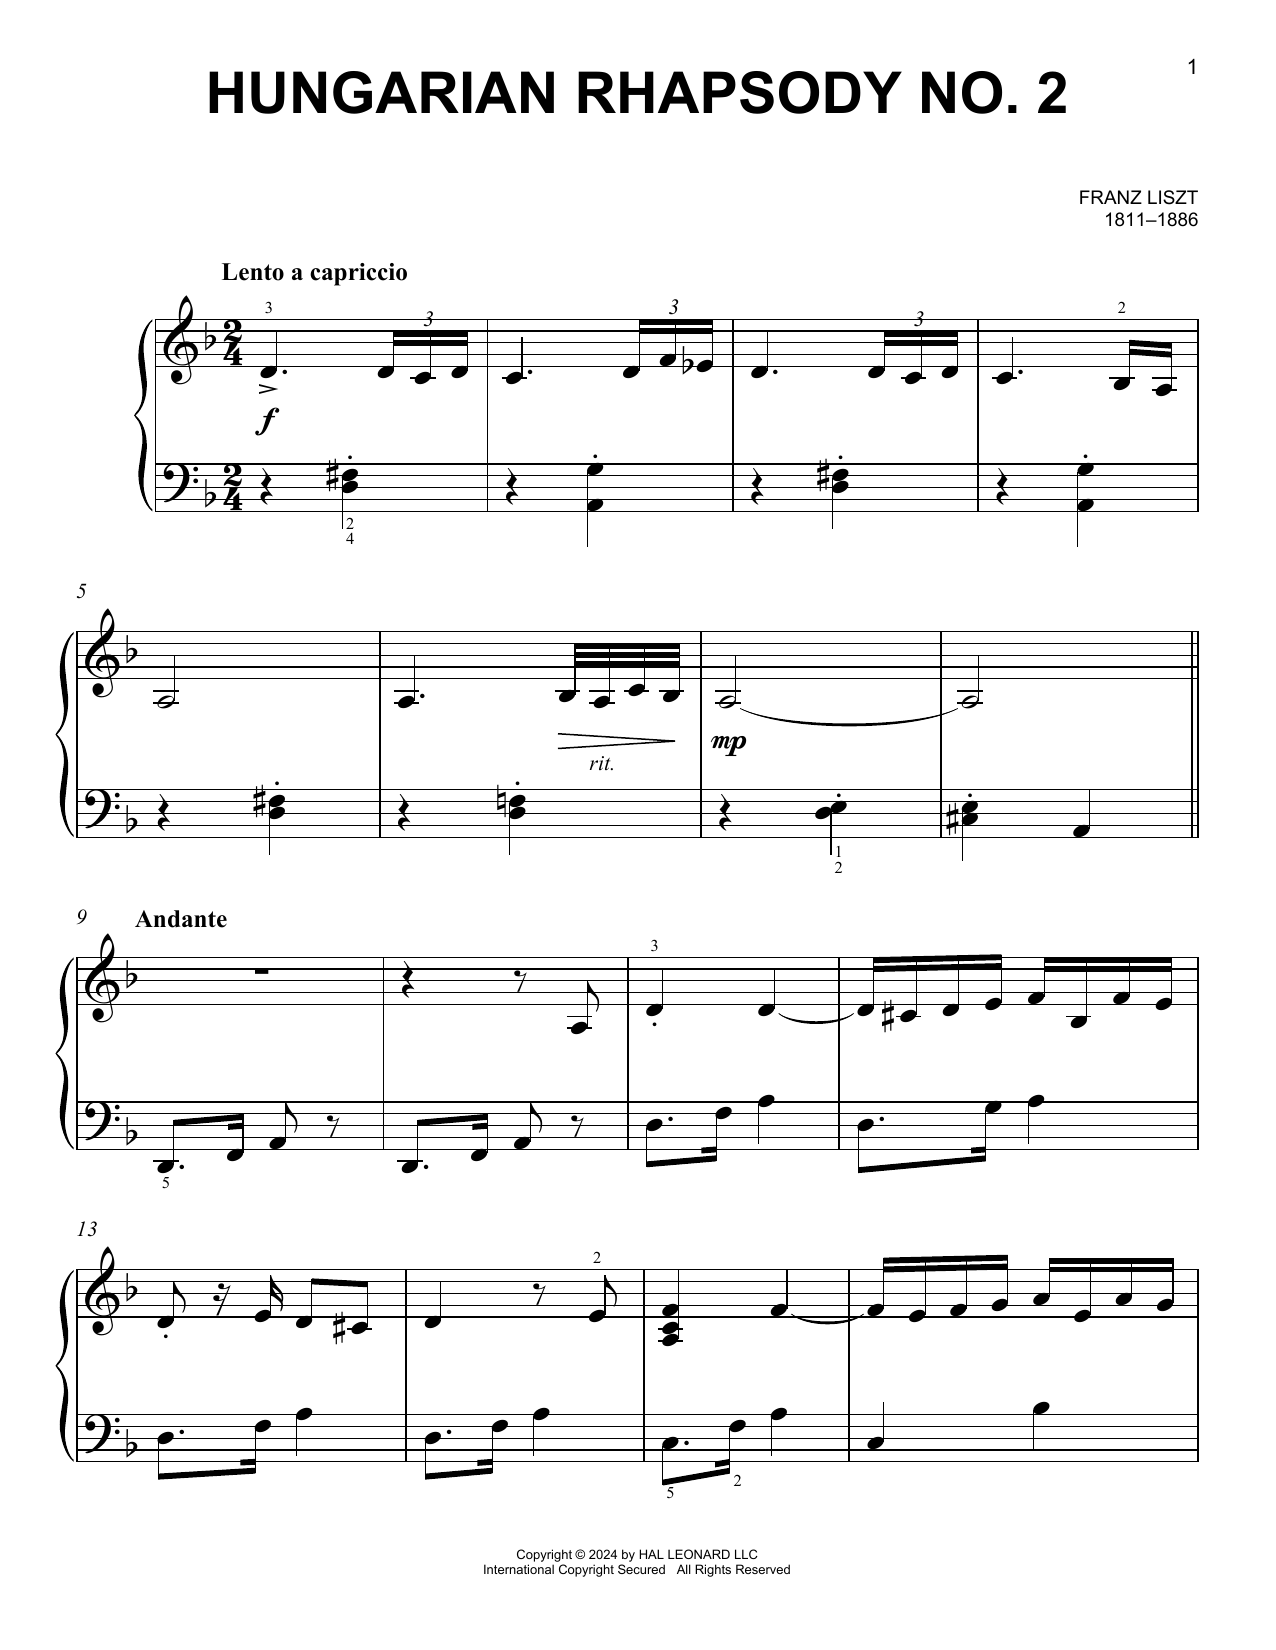 Franz Liszt Hungarian Rhapsody No. 2 sheet music notes printable PDF score